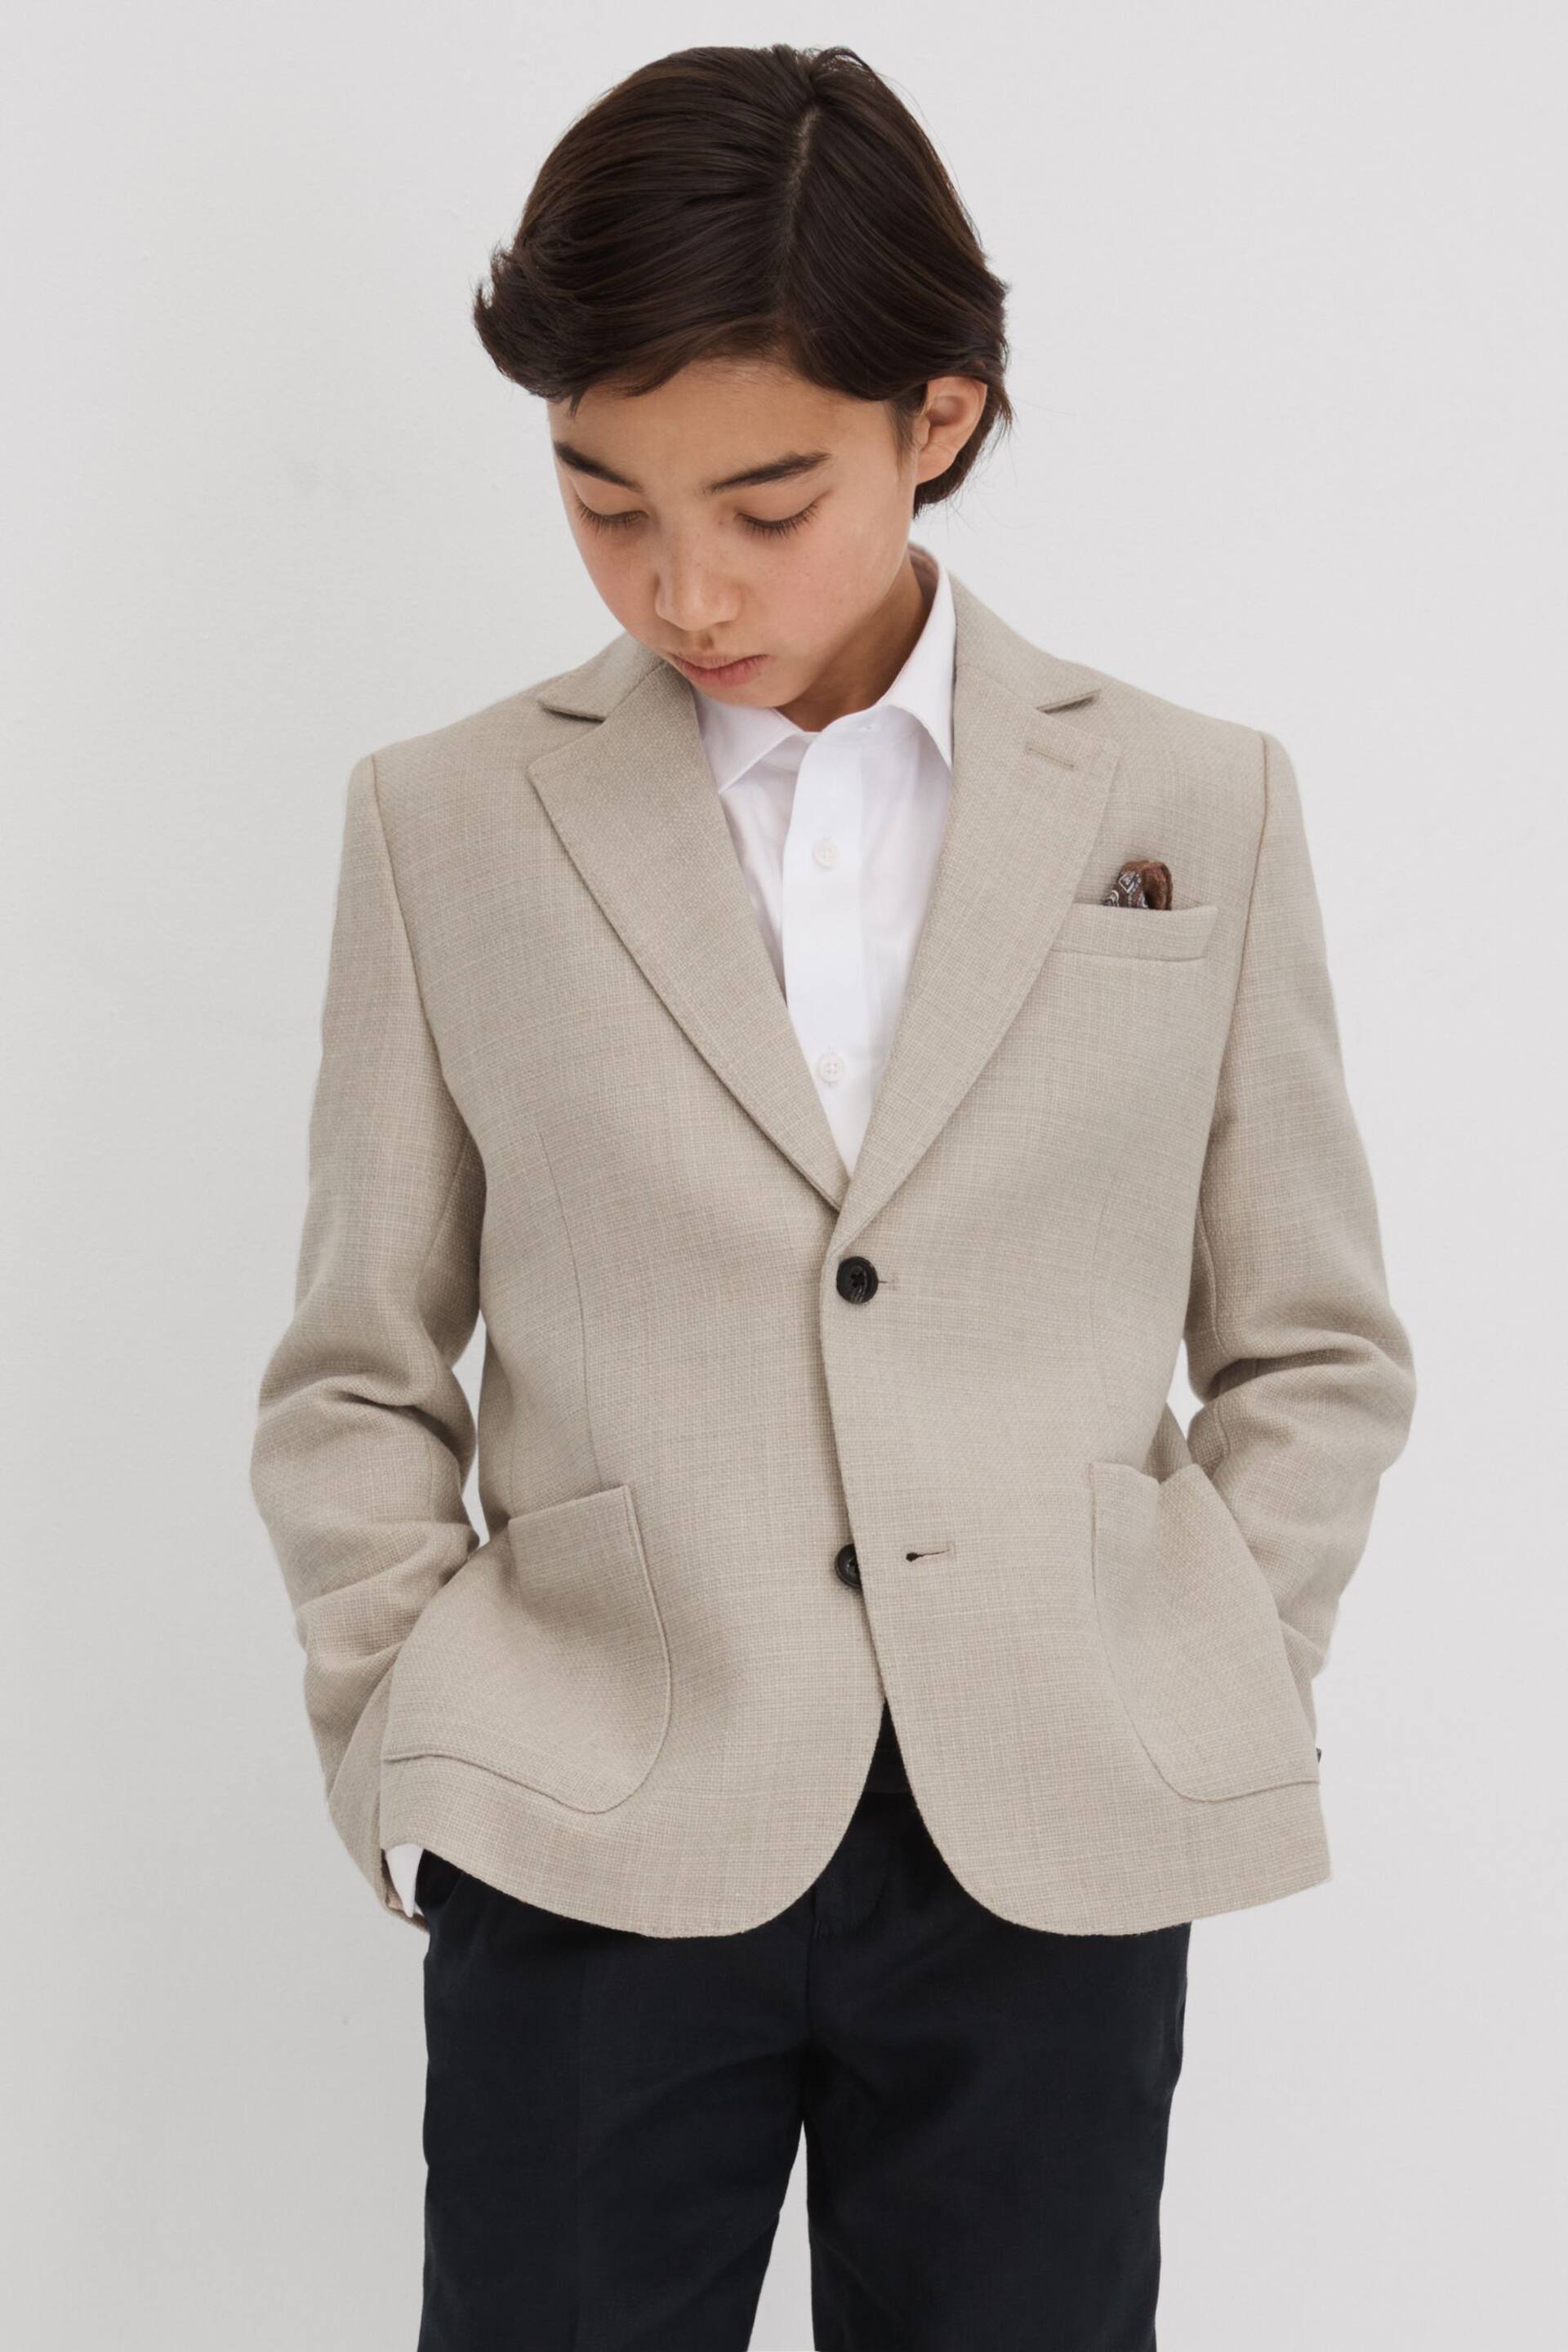 Reiss Stone Attire Junior Textured Wool Blend Single Breasted Blazer - Image 1 of 4